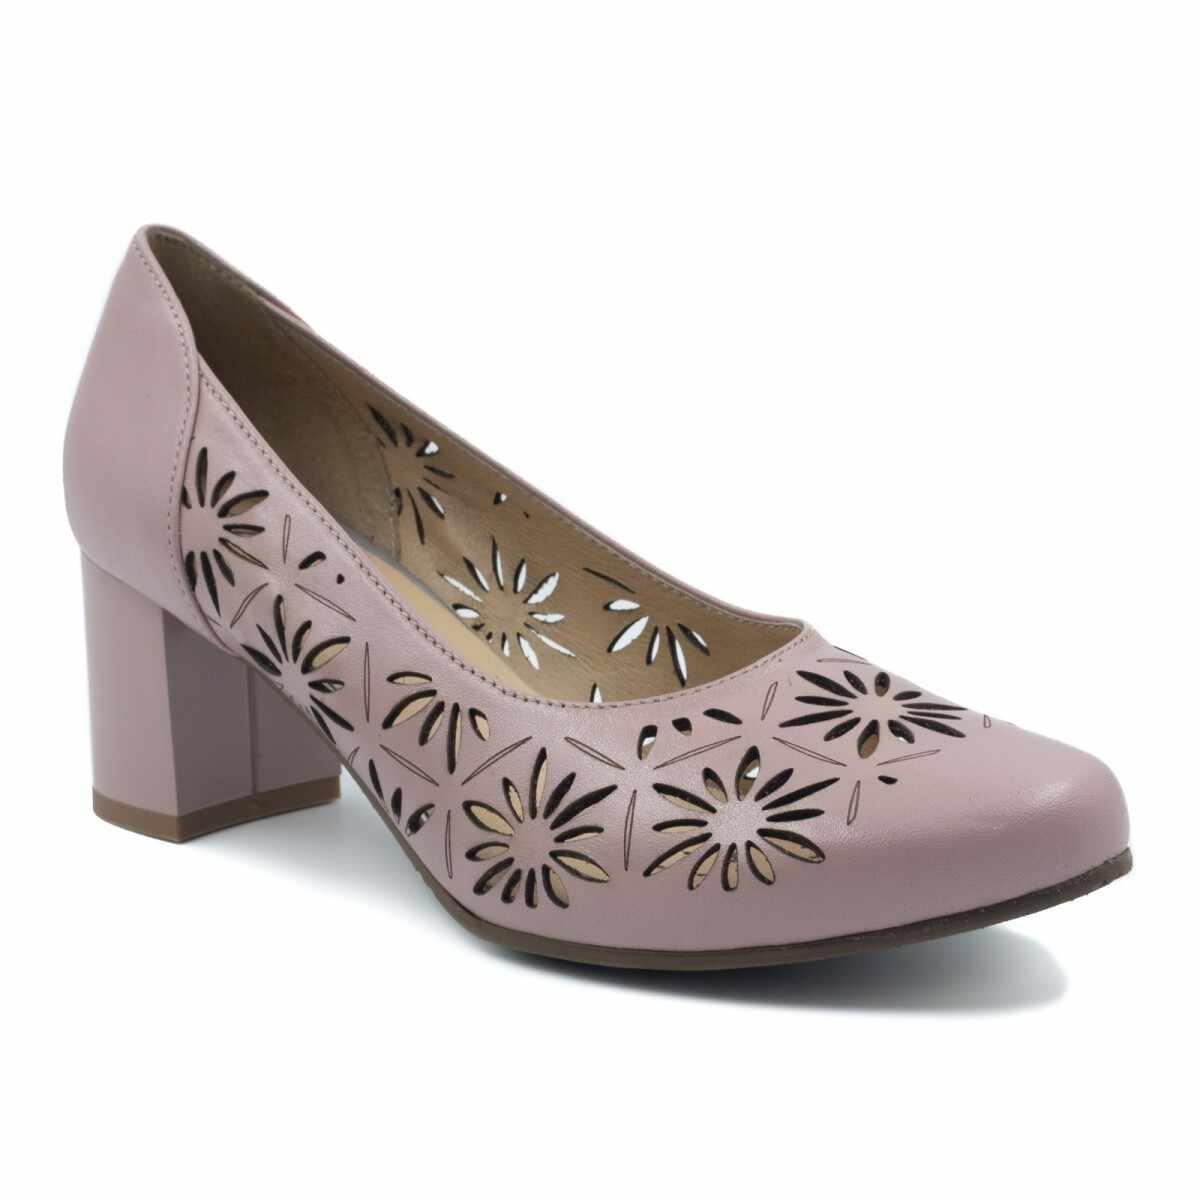 Pantofi Eleganti Dama, Beatrixx, Bej, cod 1273A